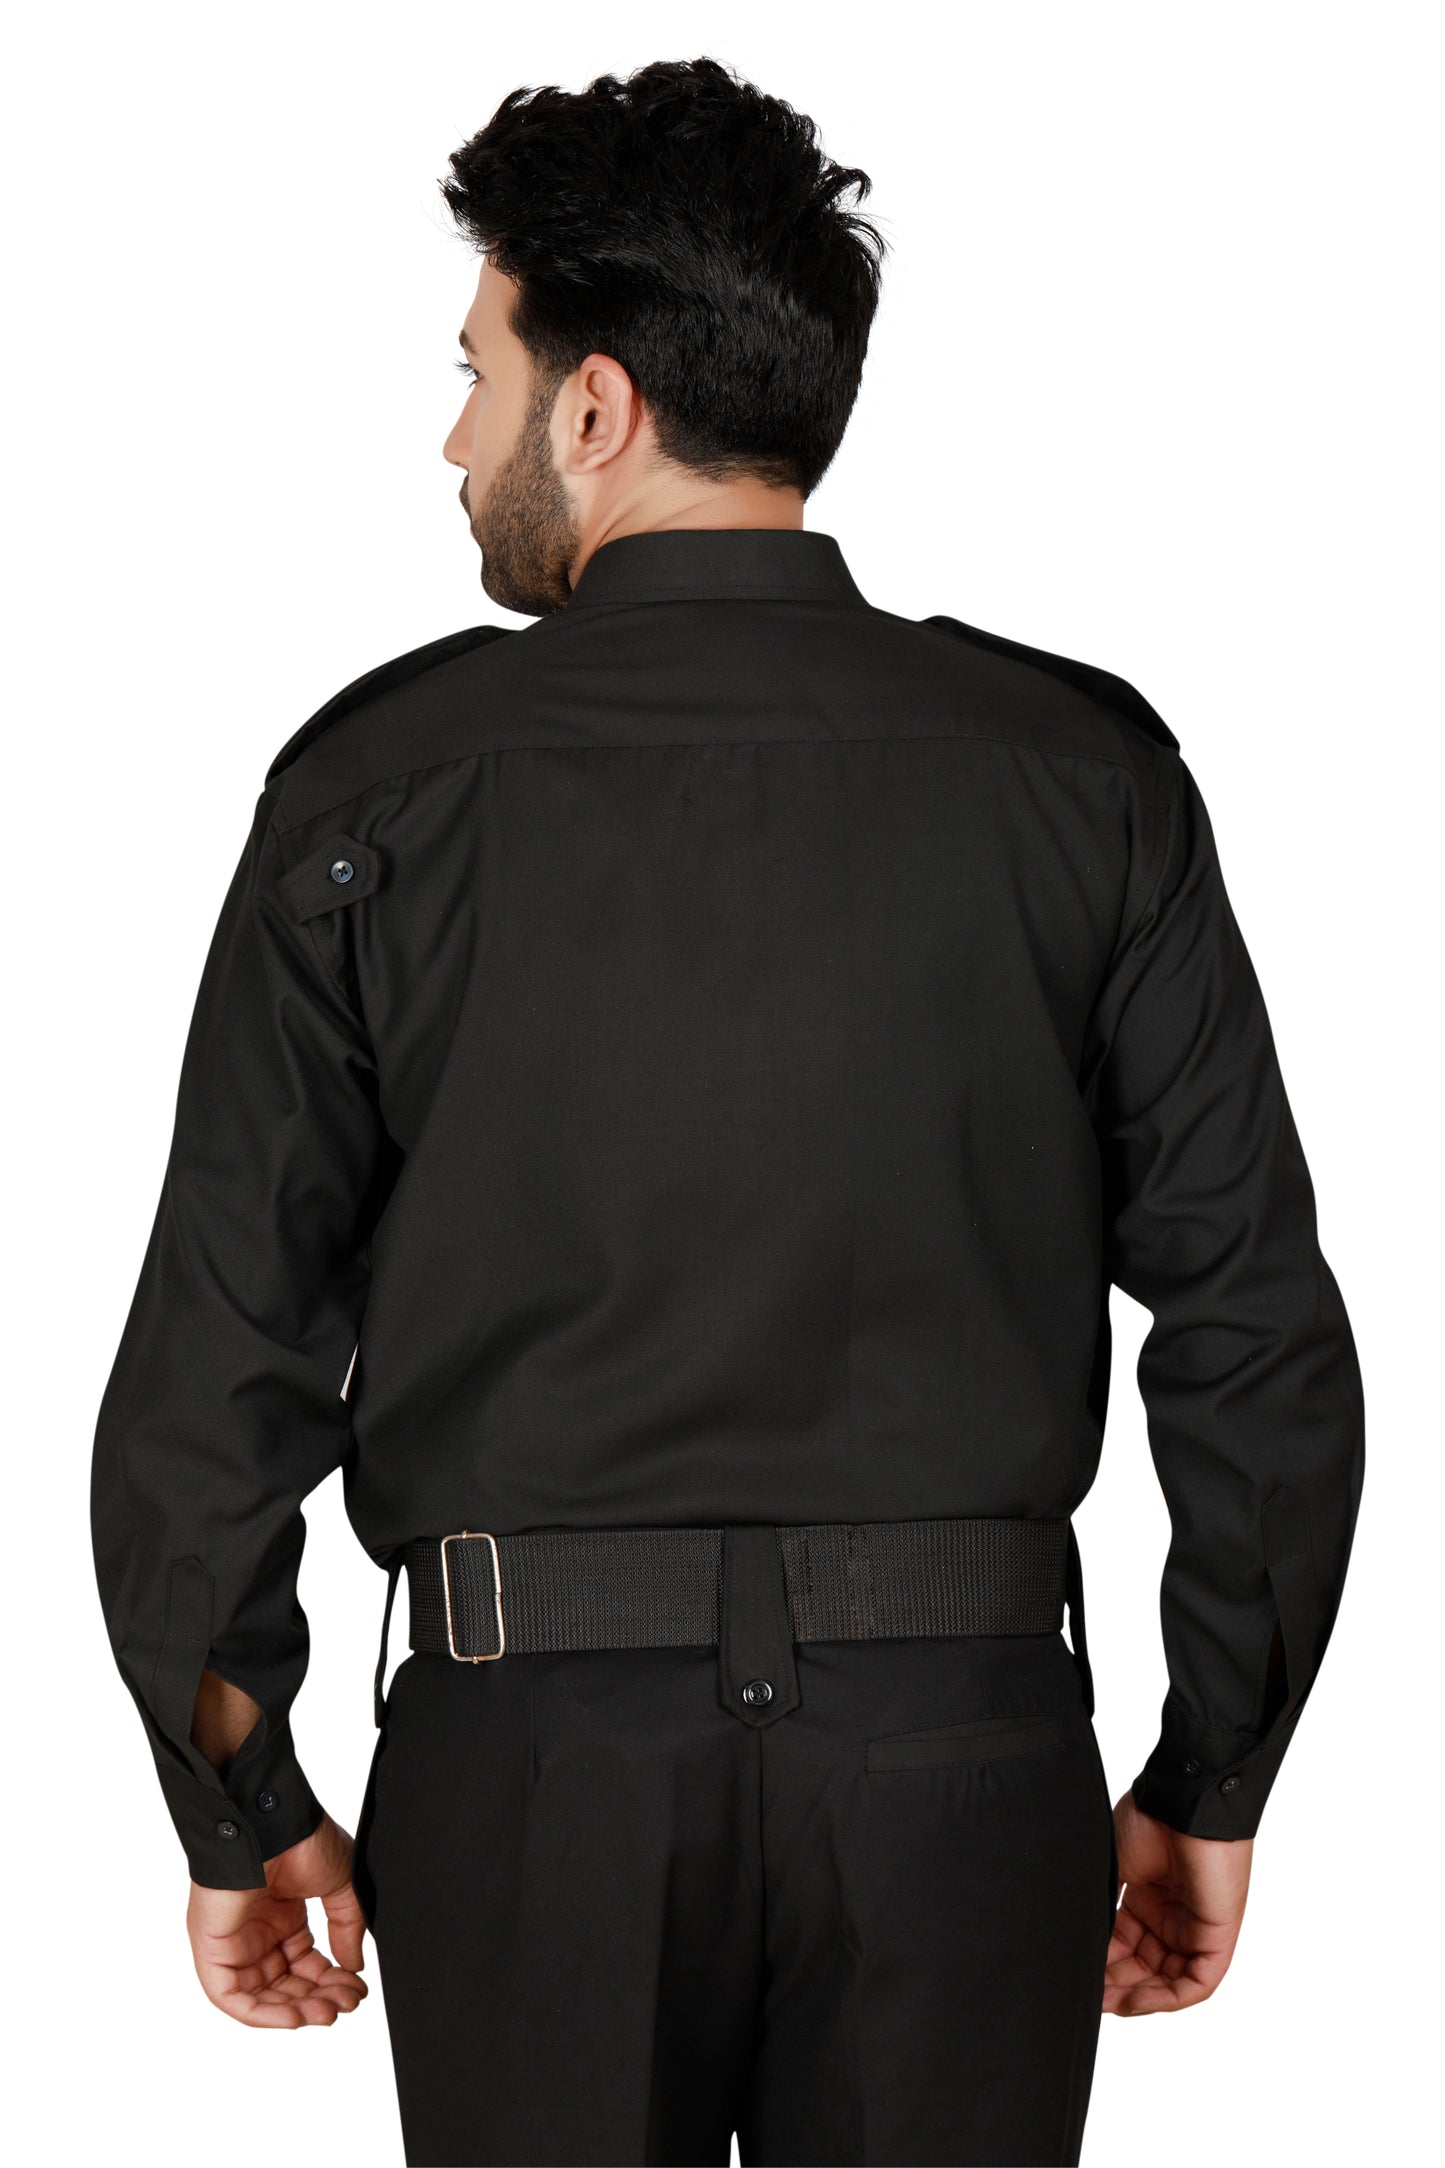 Security Guard Full Sleeves Shirt - Black